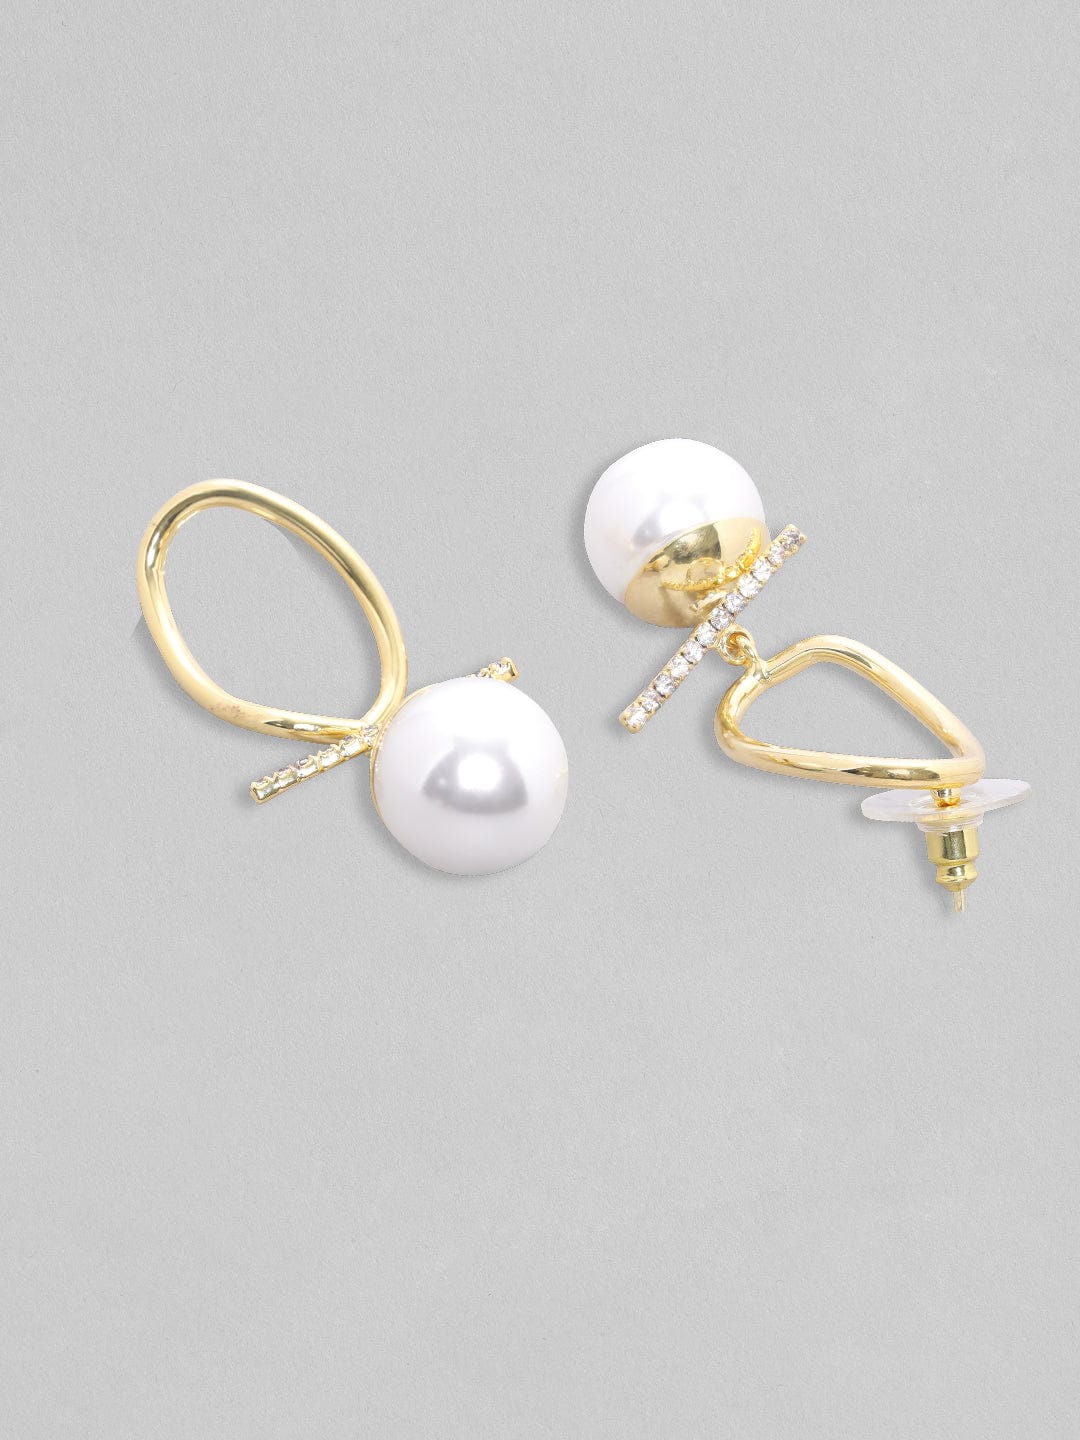 Rubans Voguish Gold-Plated Circular Drop Earrings Earrings